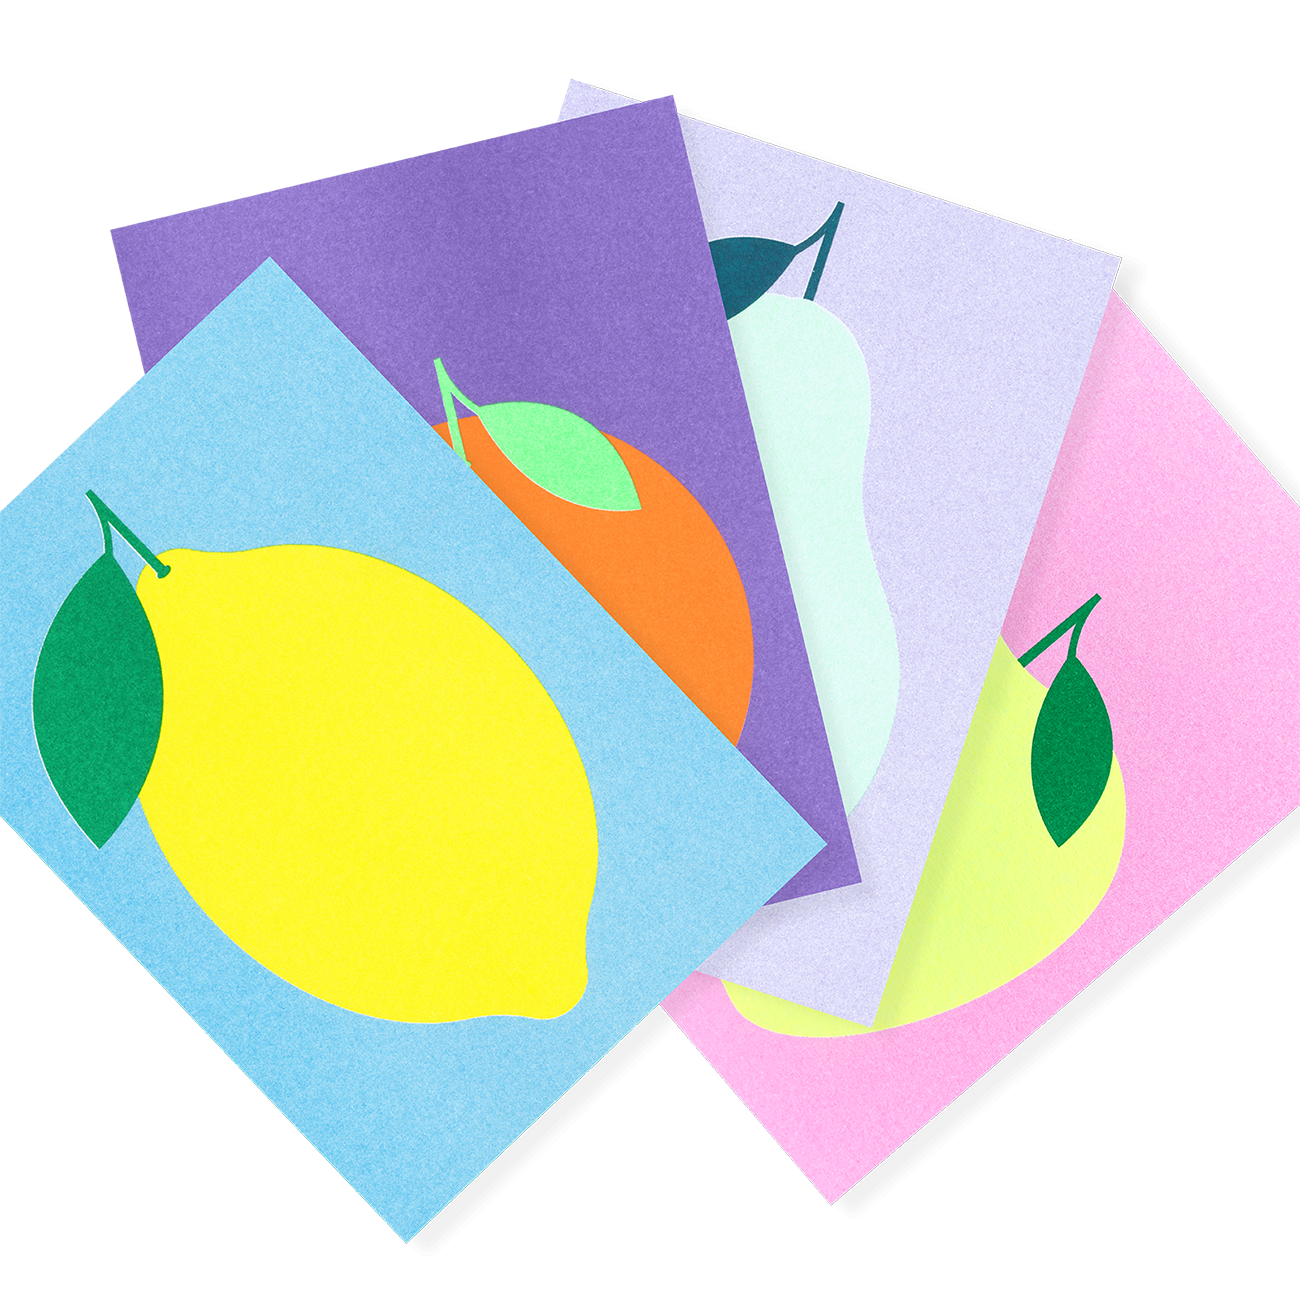 Früchte | Fruits | 4 Colorful Risograph Postcards by Herr & Frau Rio